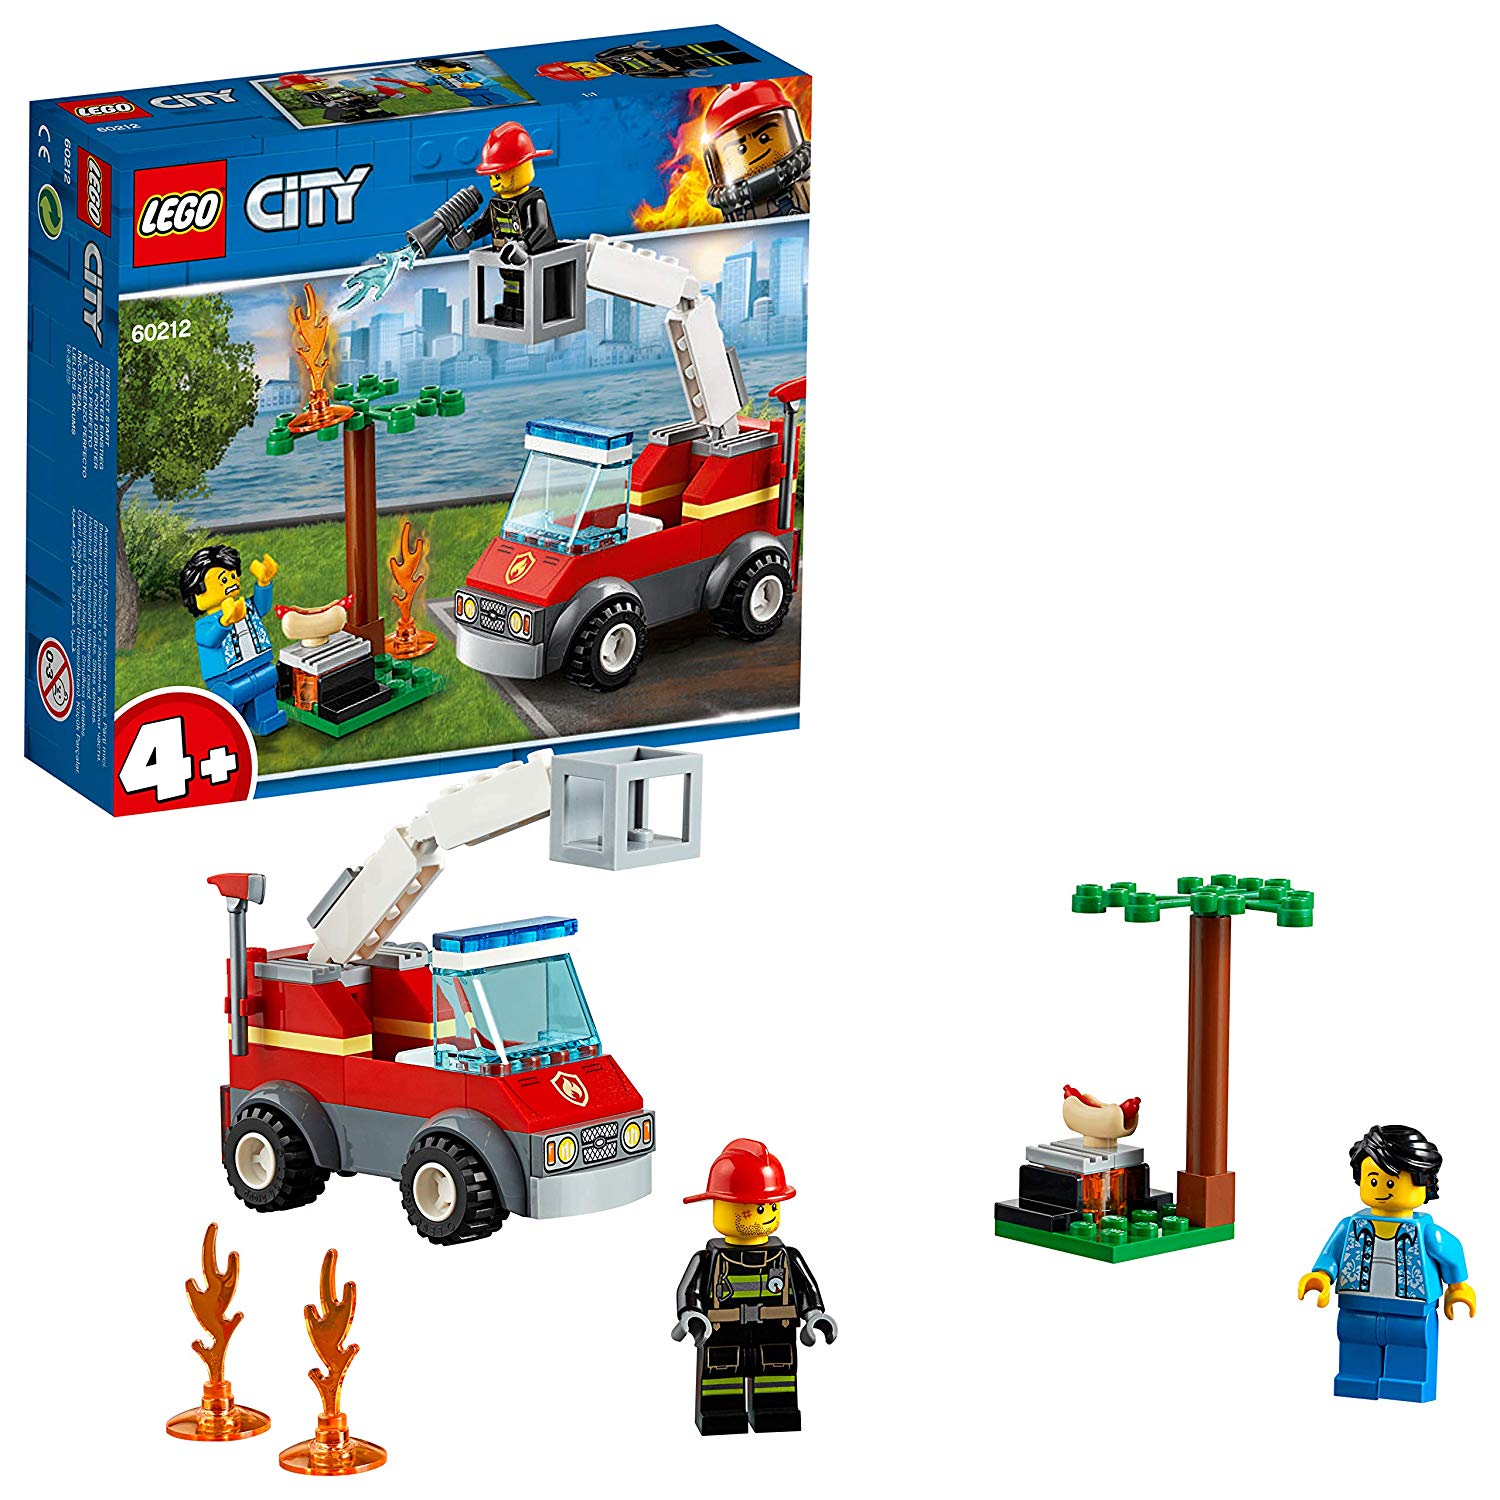 Lego City 60212 Barbecue Fire Brigade